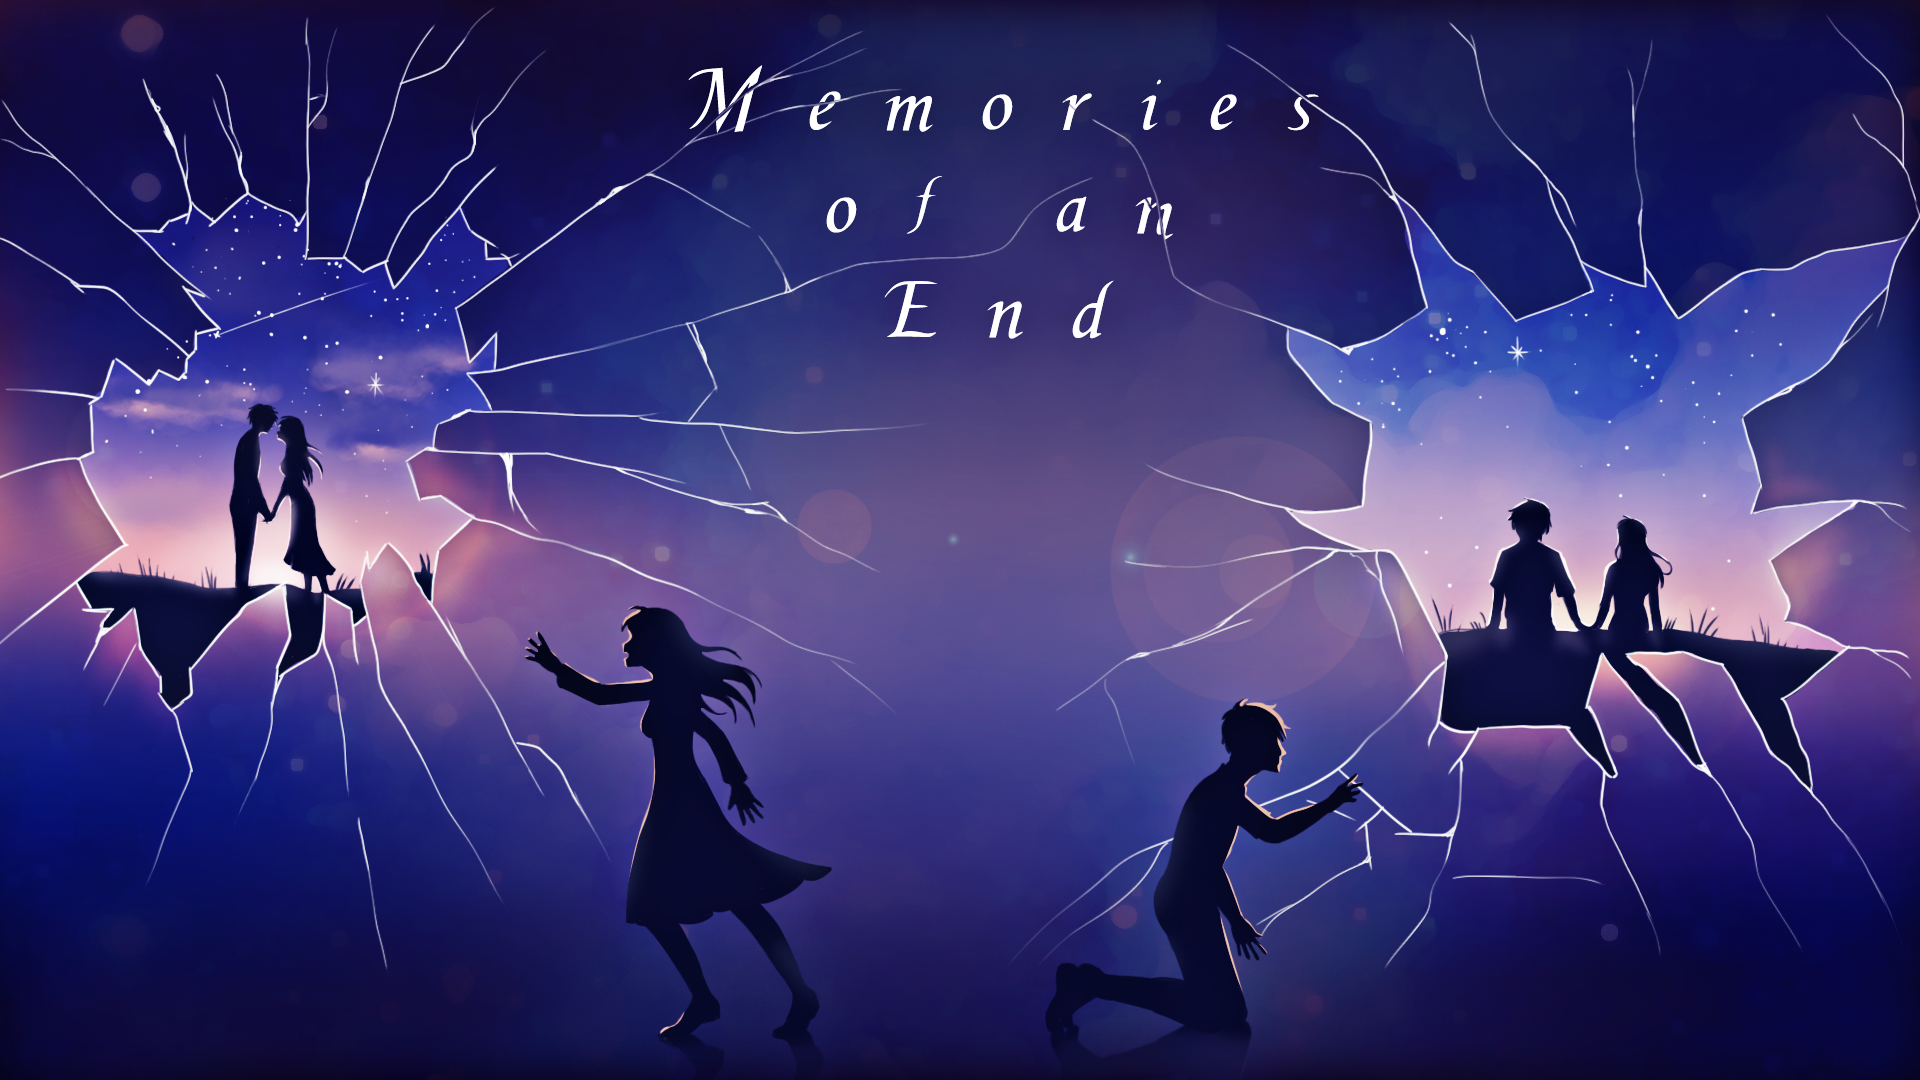 Memories of an End